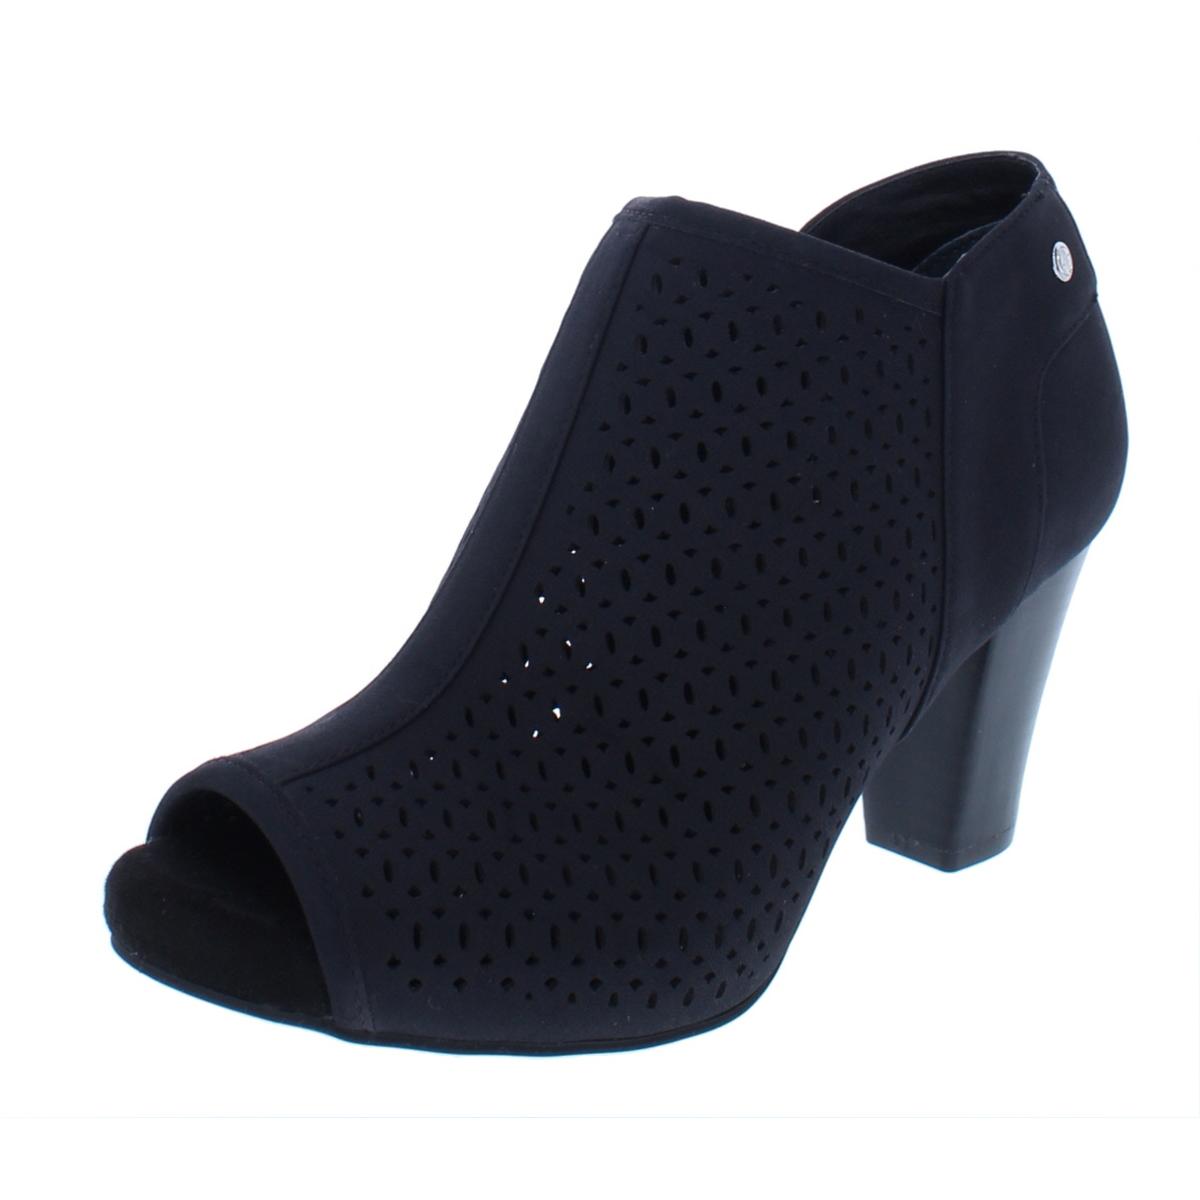 Giani Bernini Womens Angye Black Shooties Shoes 9.5 Wide